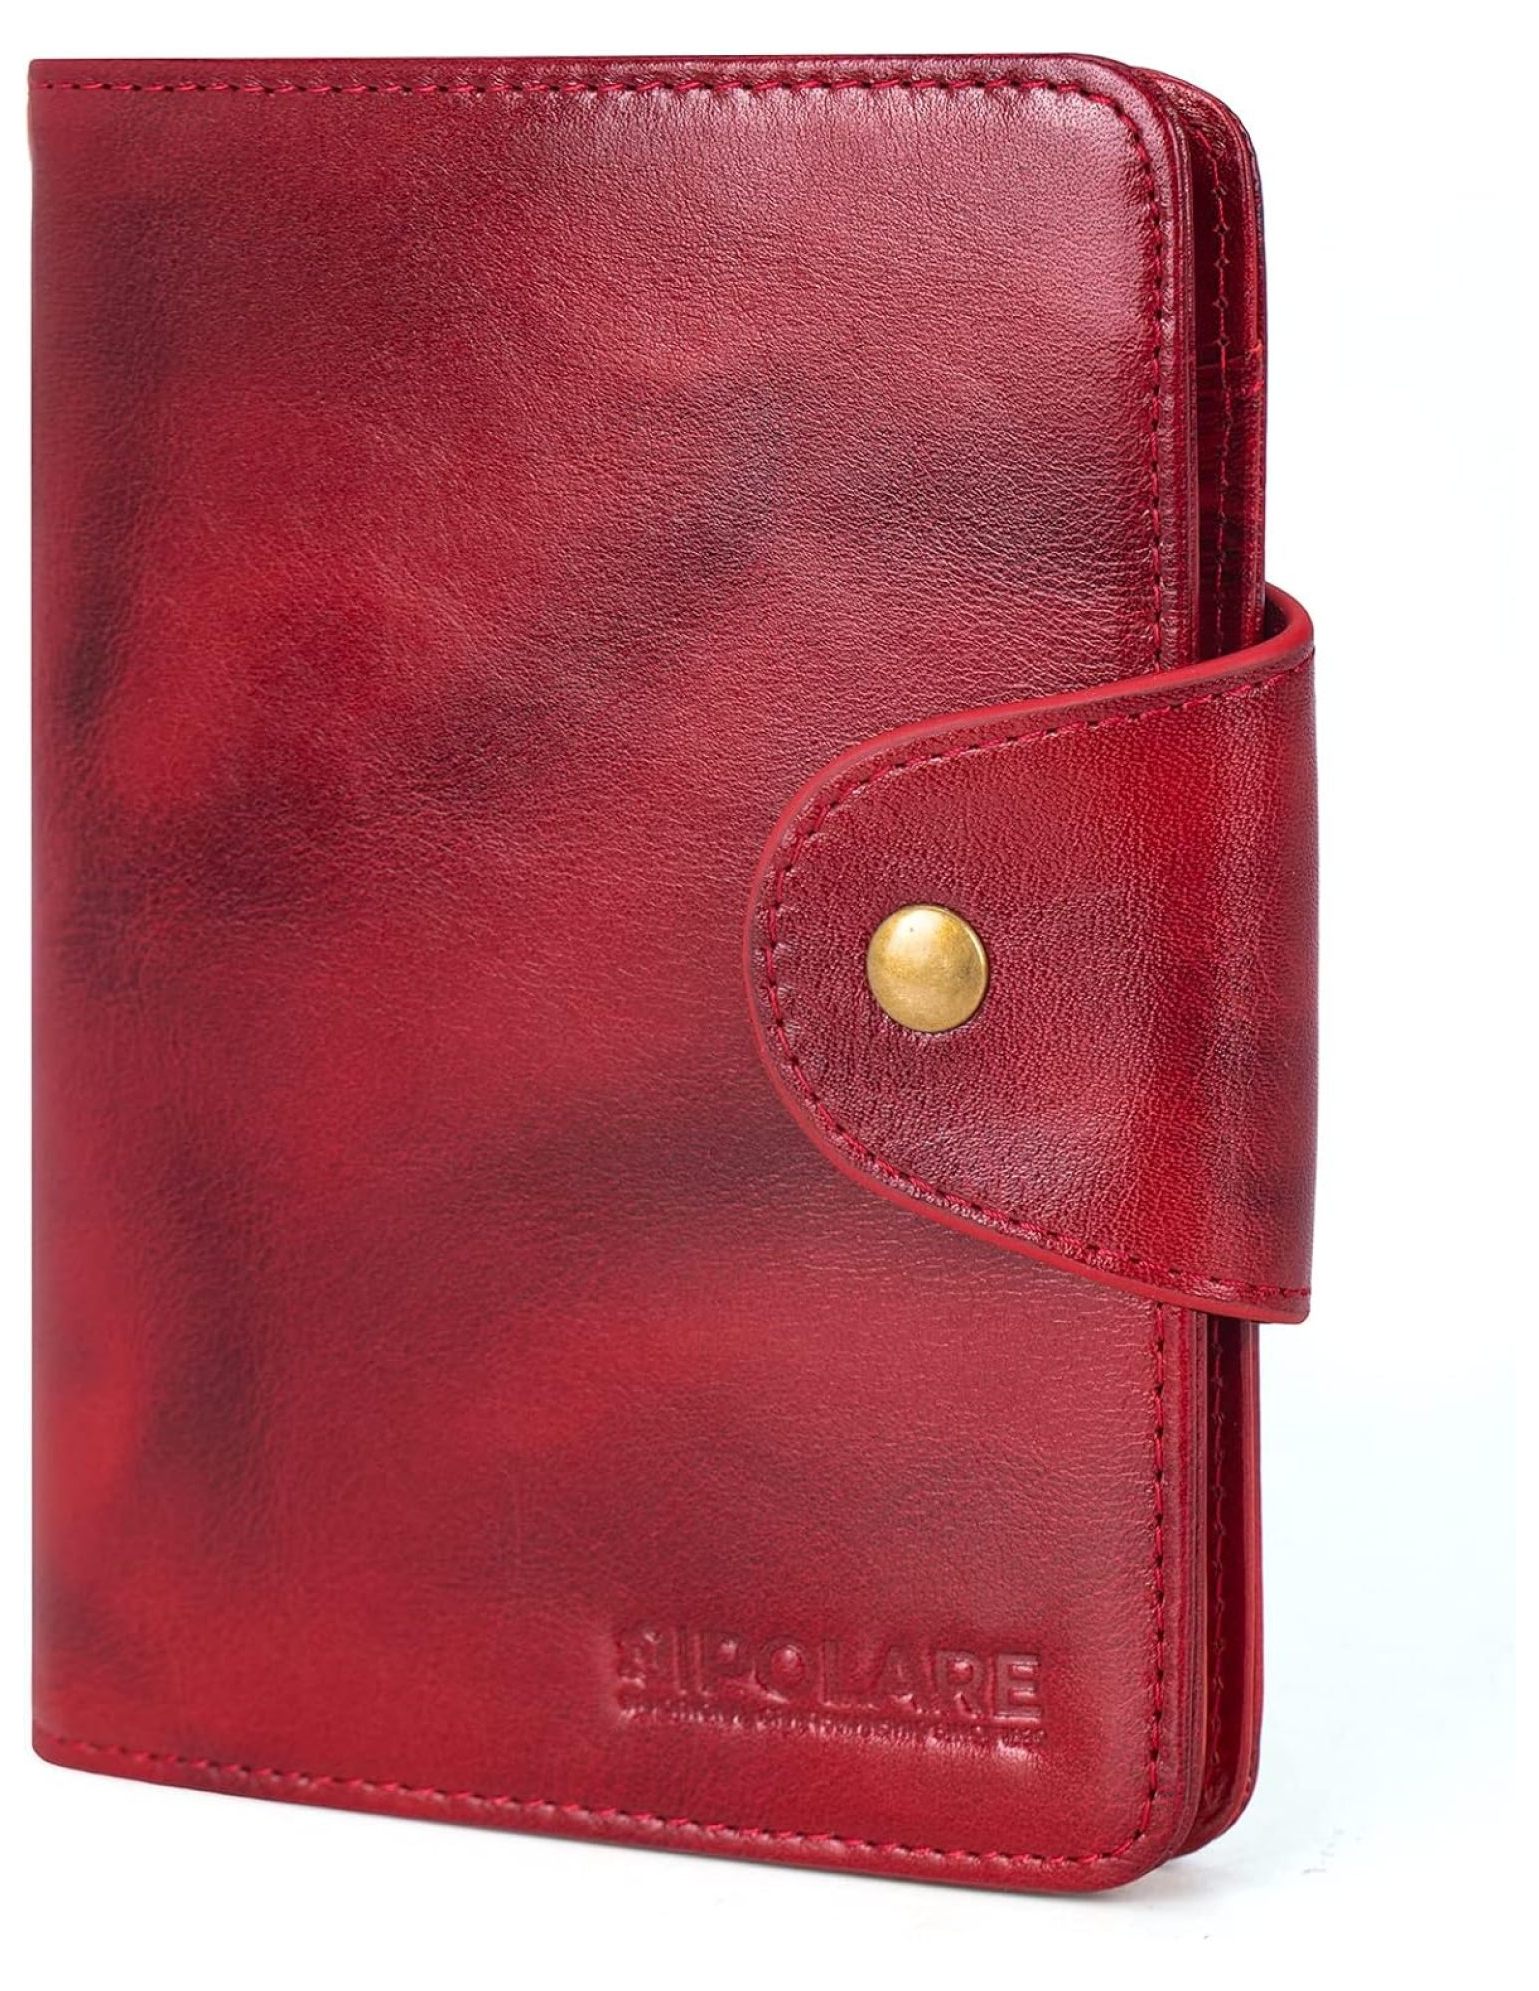 Polare Full Grain Leather Slim and Soft RFID Blocking wallet For Men ...